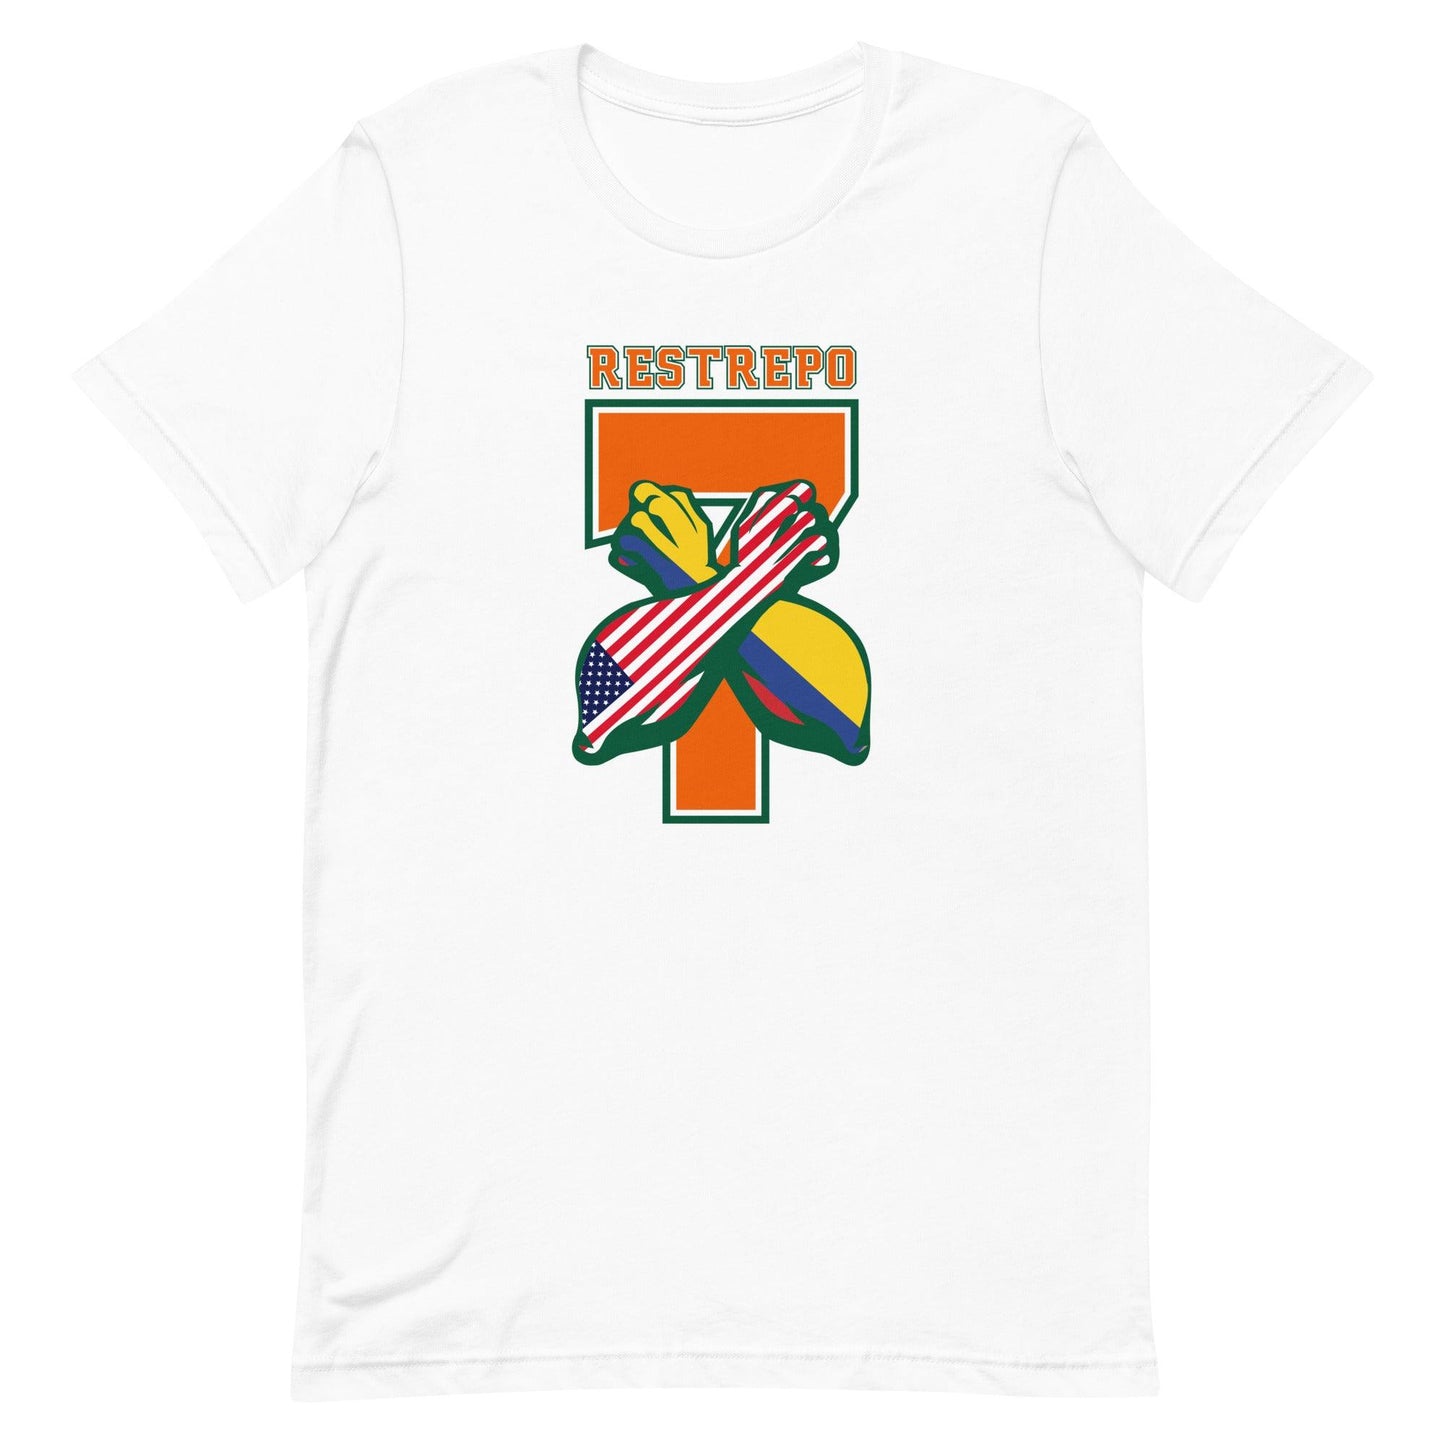 Xavier Restrepo "Represent" t-shirt - Fan Arch